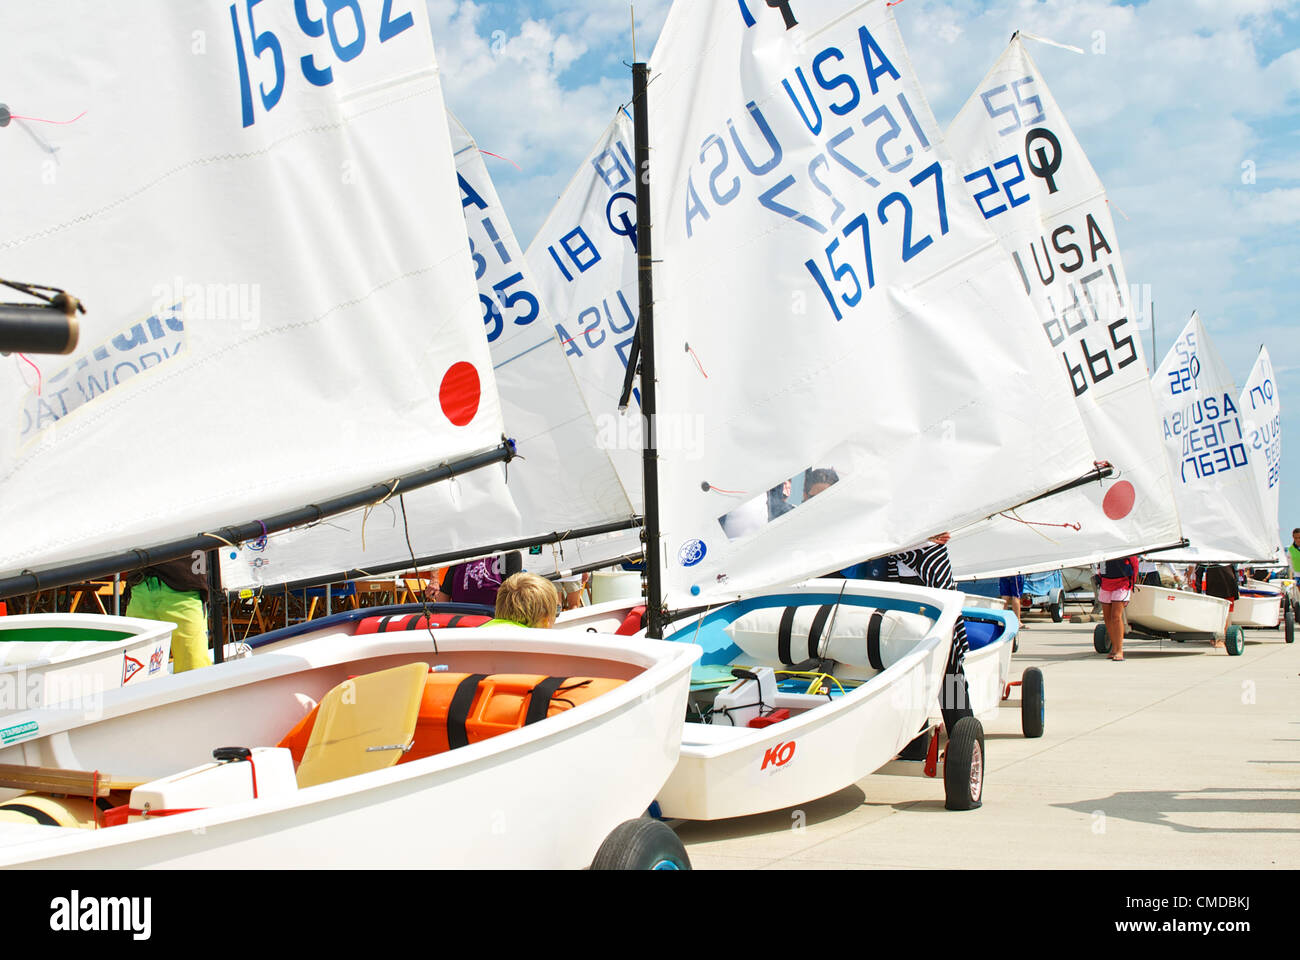 USODA National Championships - The U.S. Optimist Dinghy Nationals Stock Photo